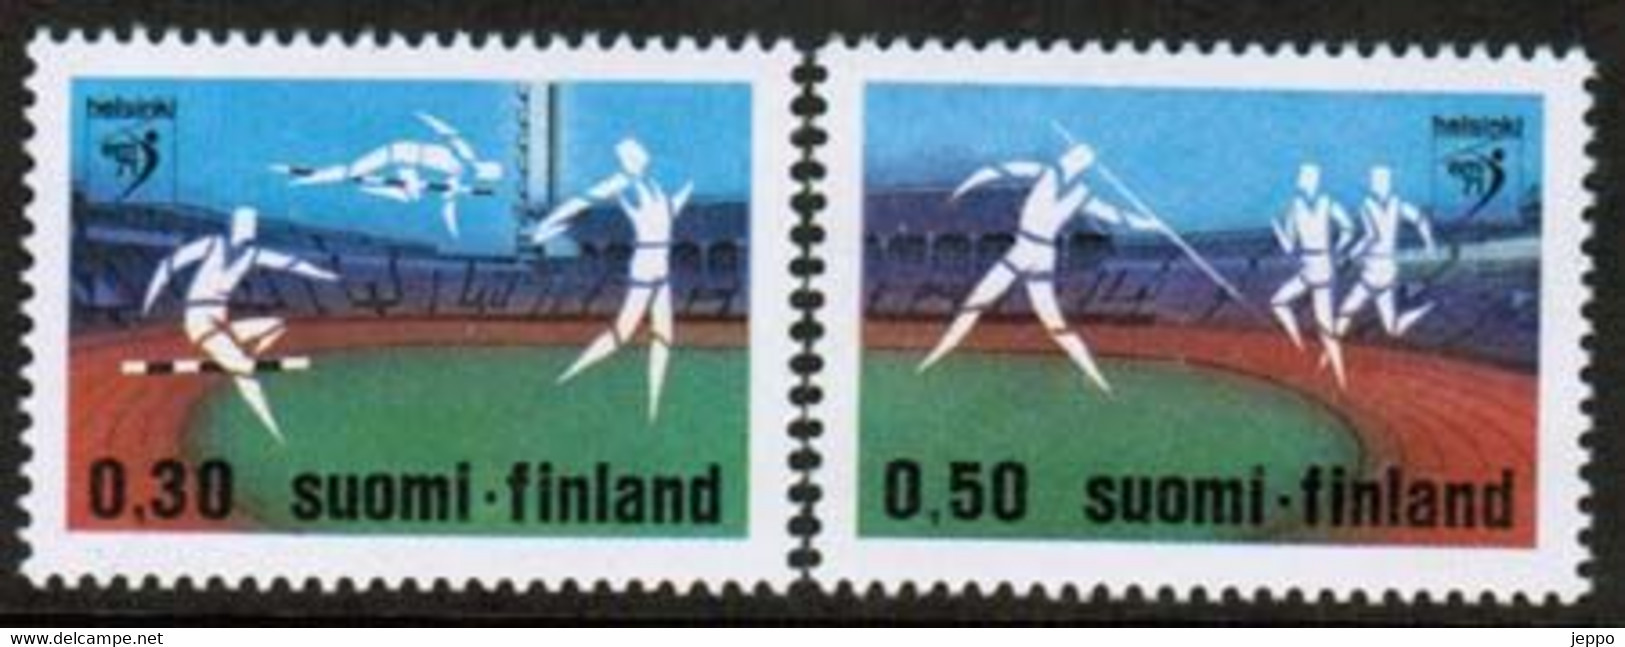 1971 Finland European Athletic Shampionships Complete Set MNH. - Ongebruikt